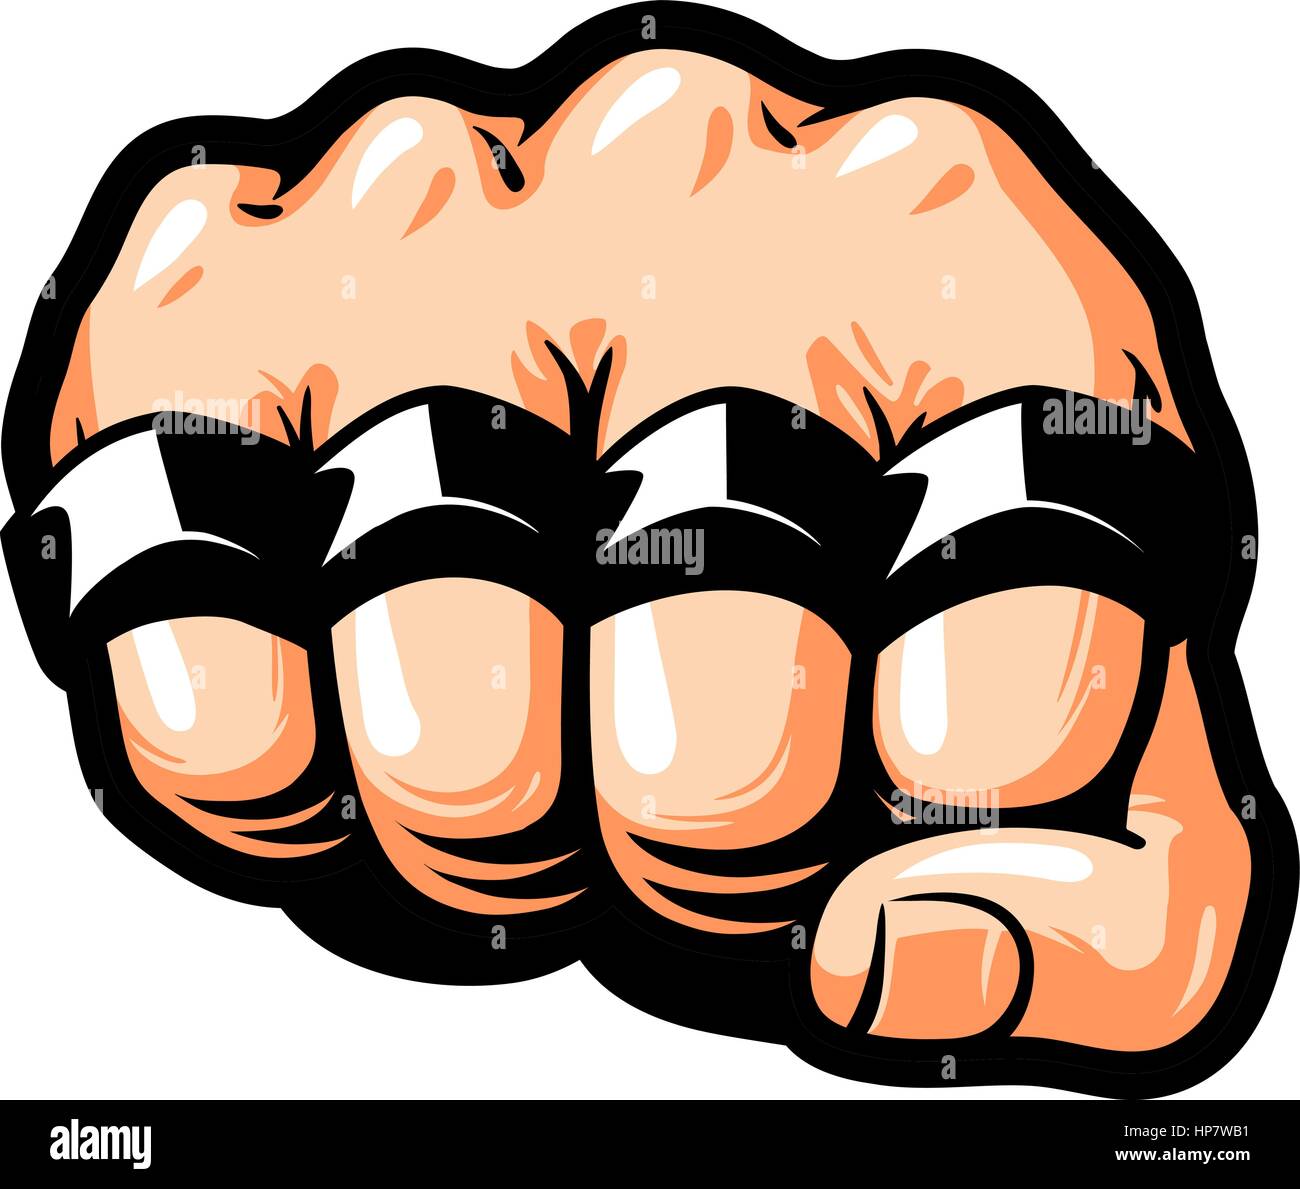 Poing serré, brass knuckles. Bandit, voyou, bandit symbole. Cartoon vector illustration Illustration de Vecteur